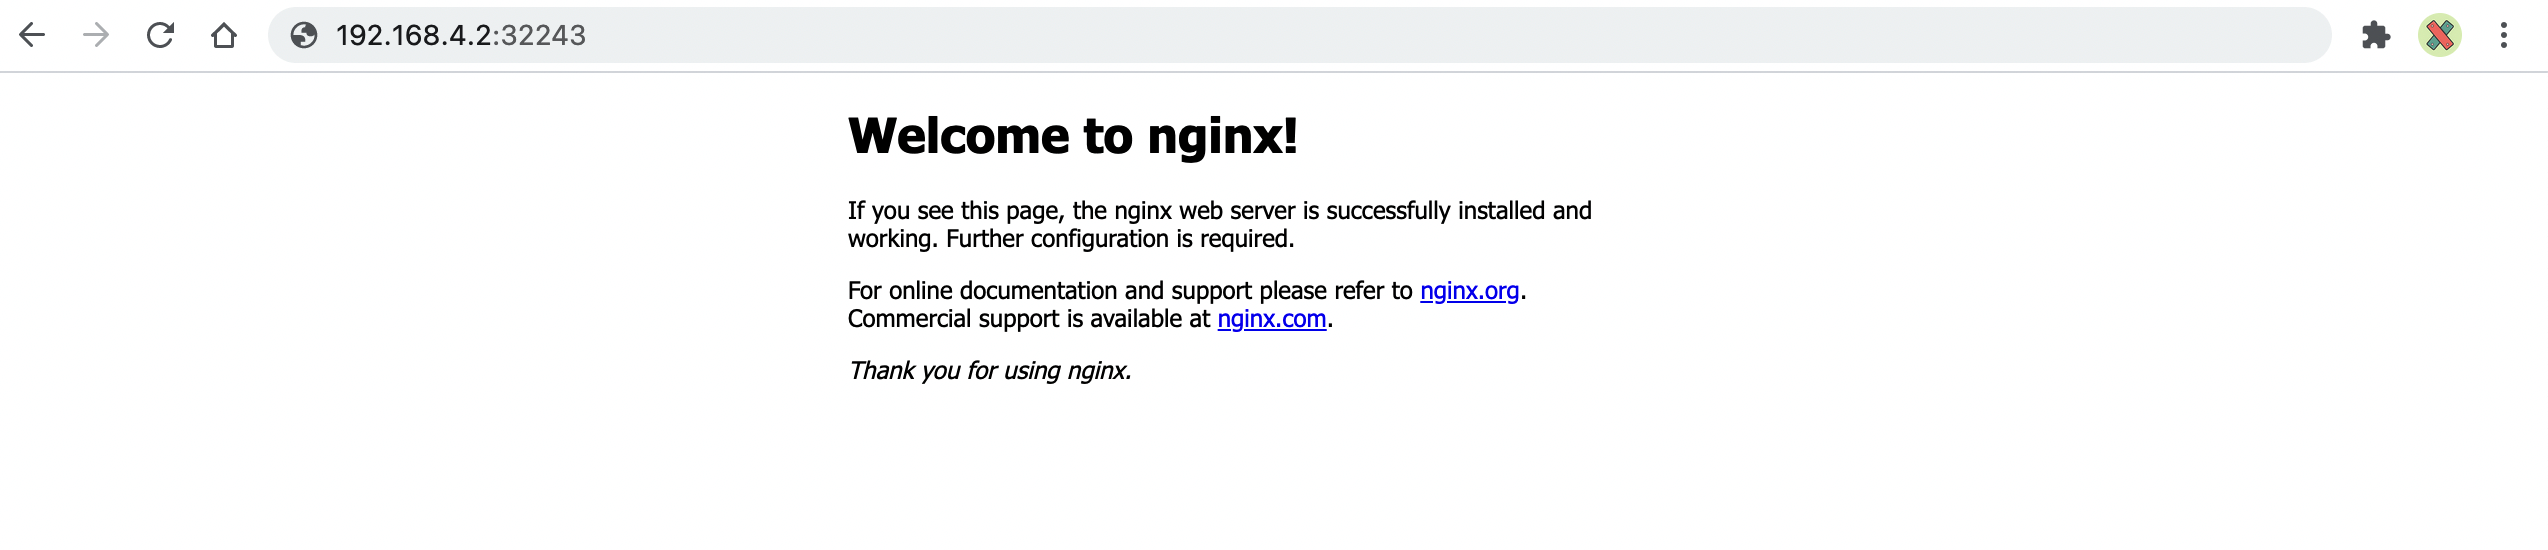 access-nginx